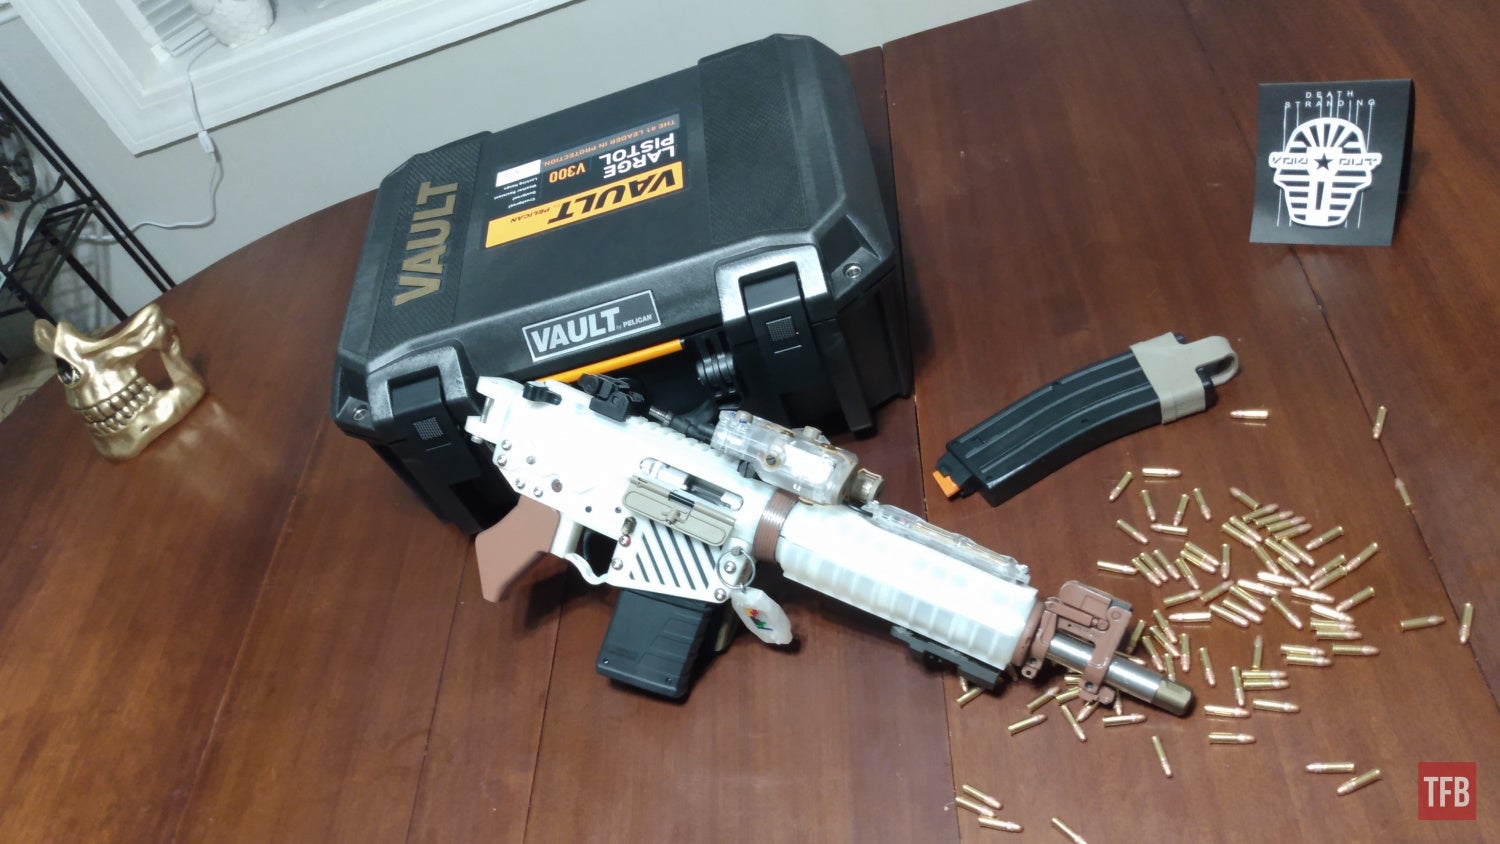 The Rimfire Report: The "Ludens" 3D Printed 22LR Ghost Gun